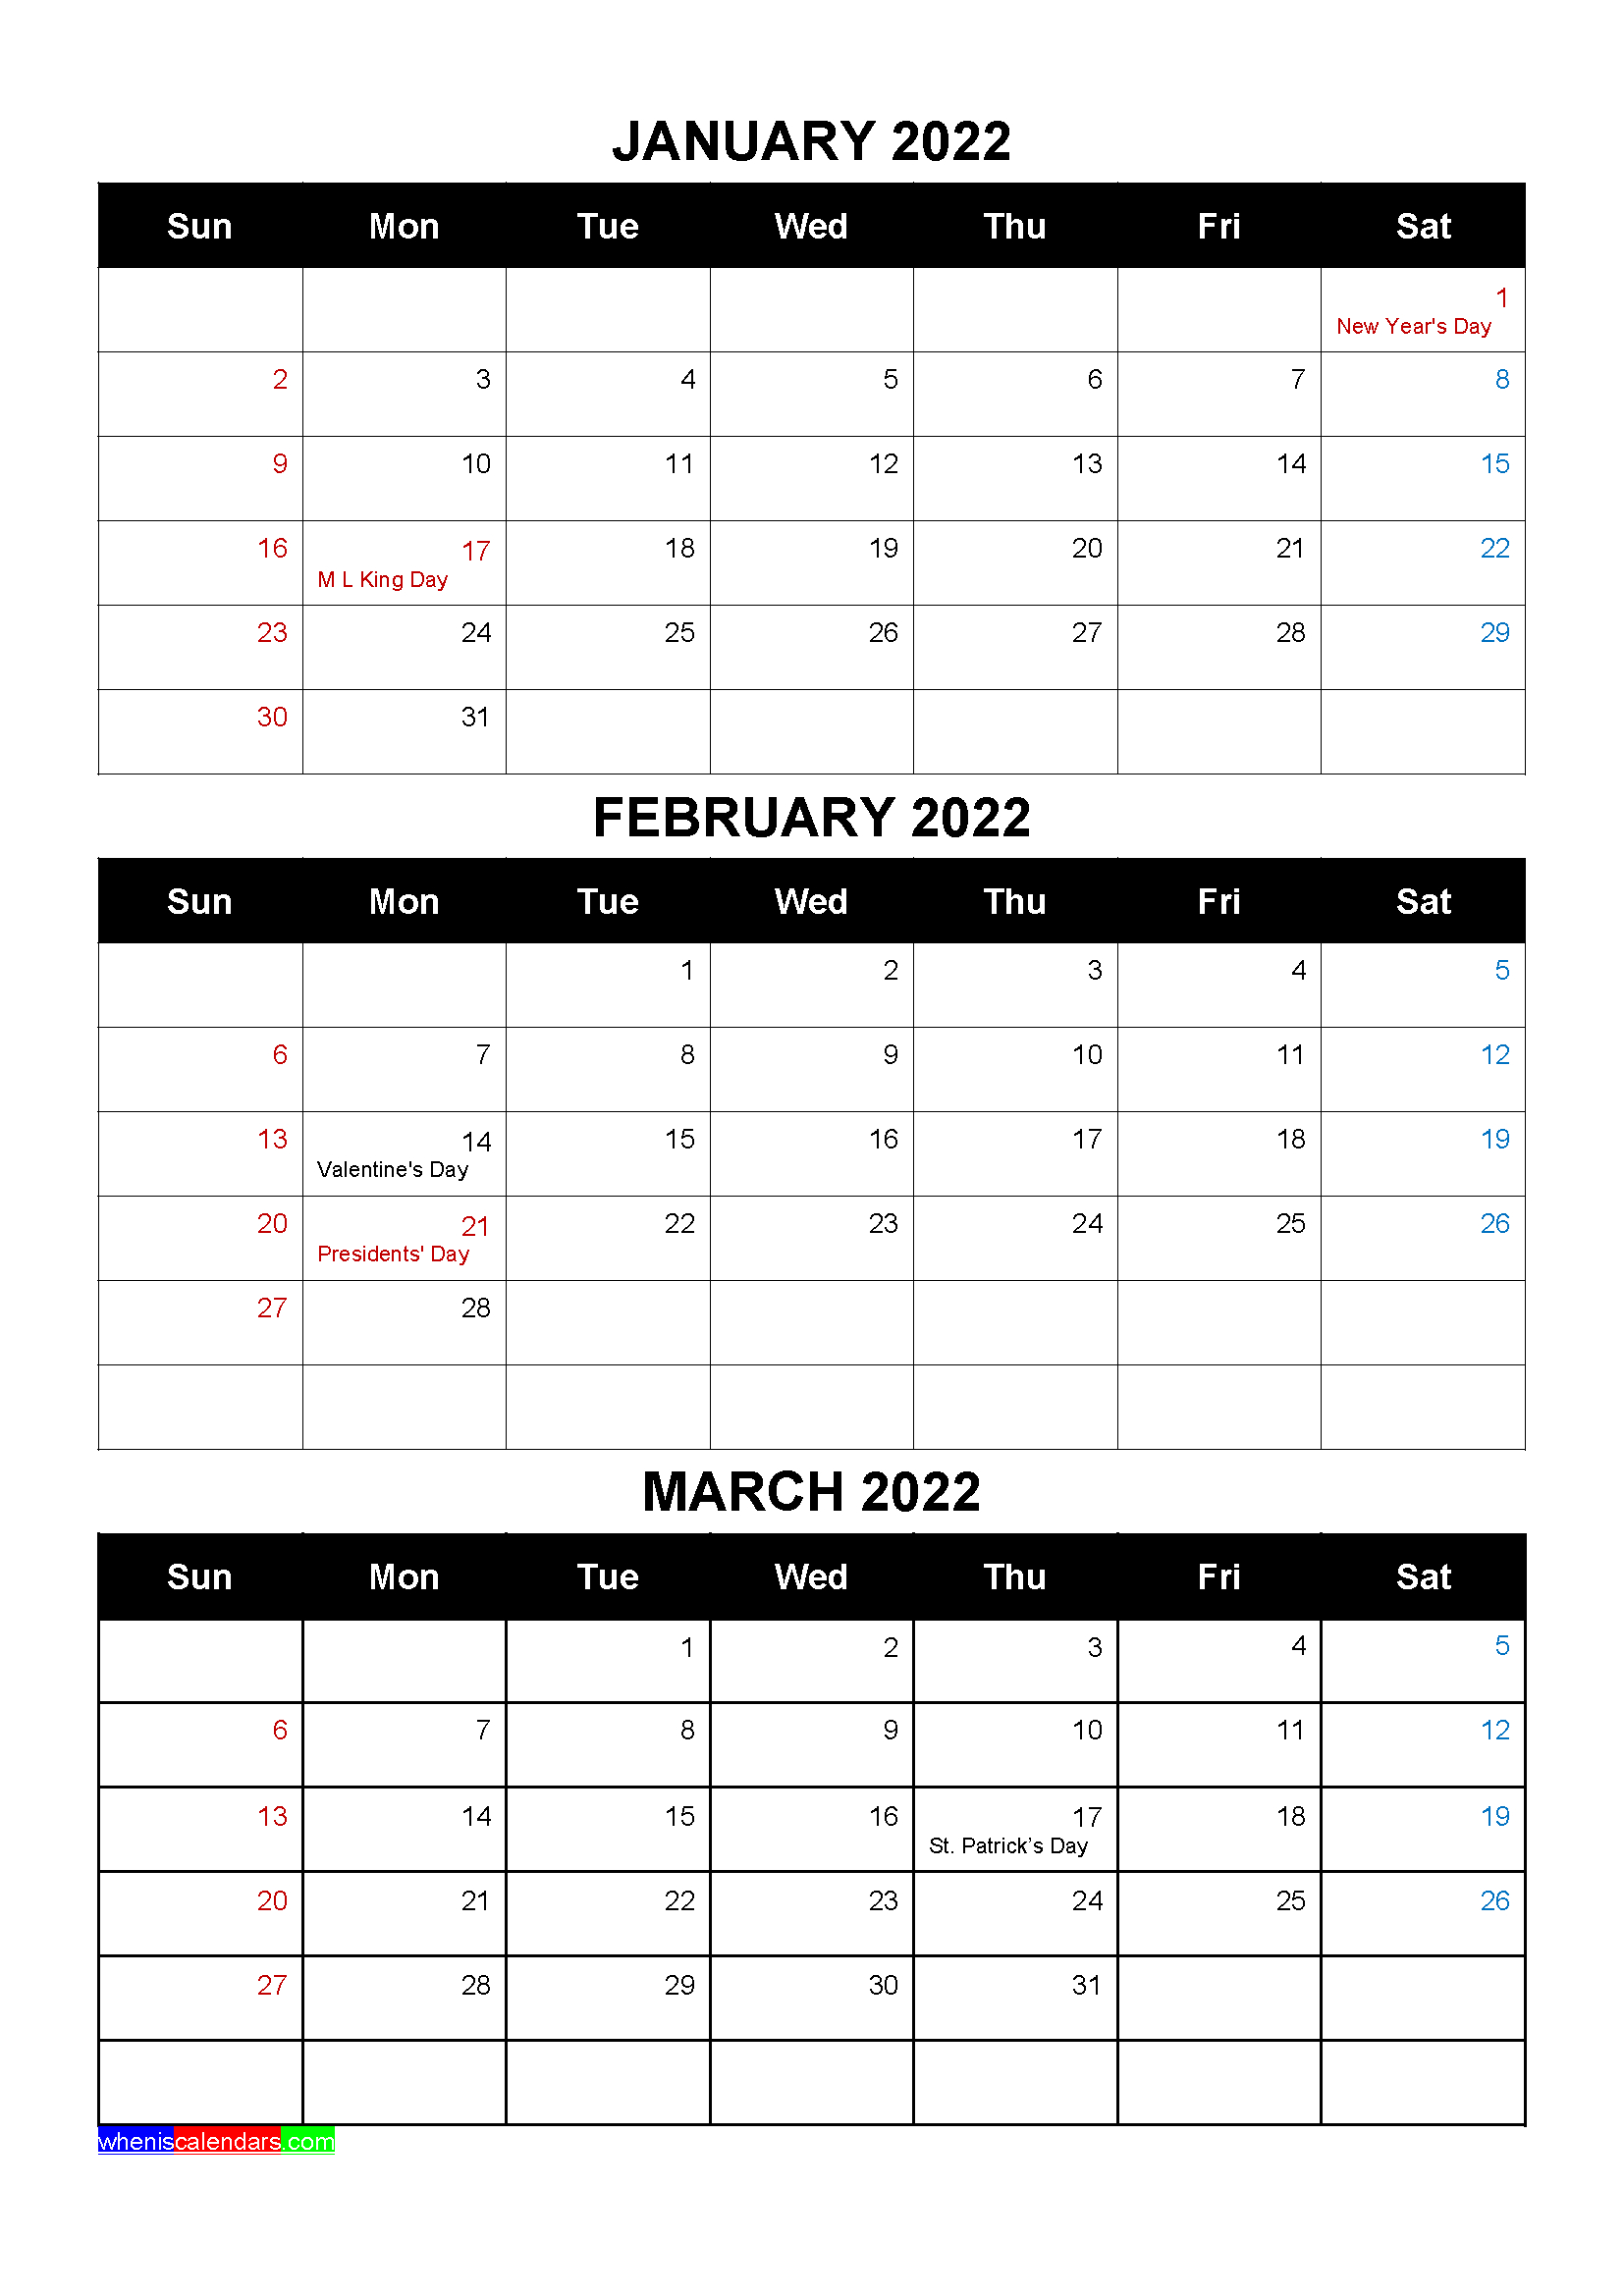 Catch Calendar 2022 January February March